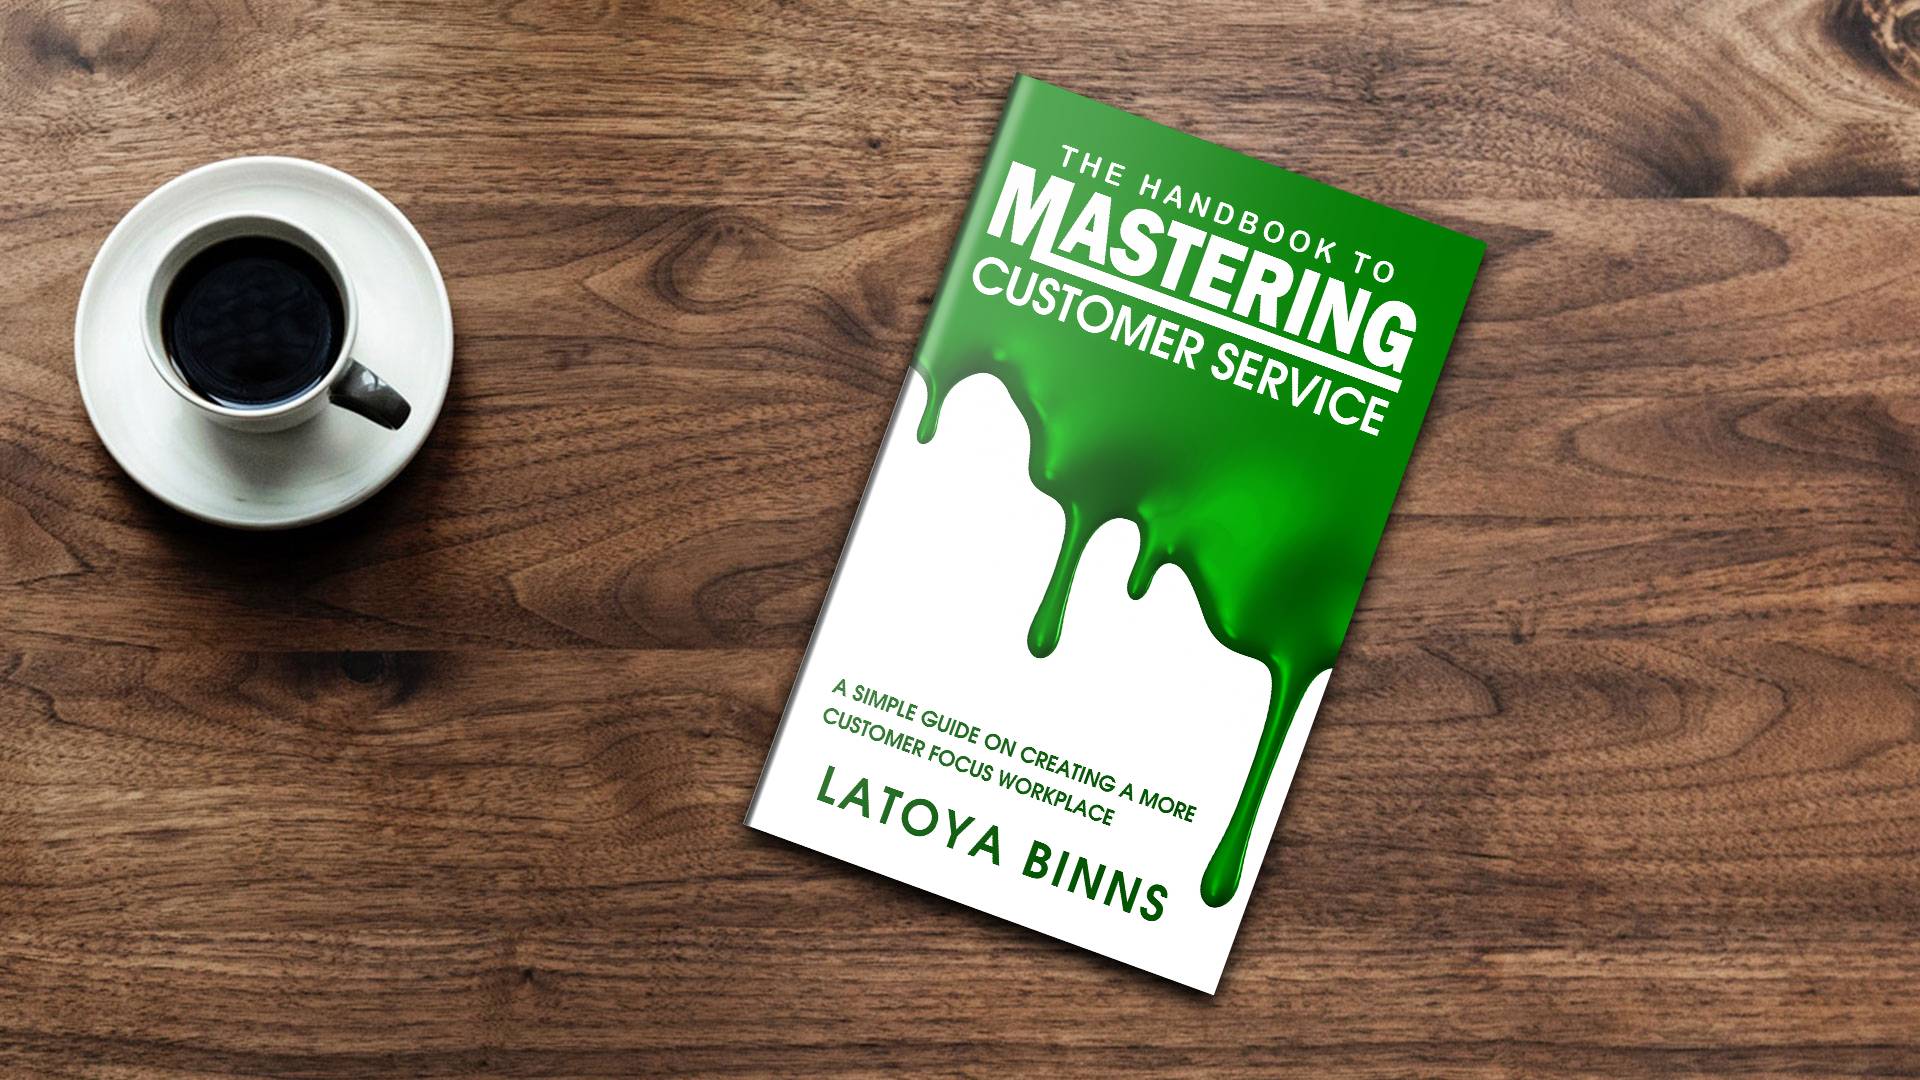 mastering-customer-service-book-by-latoya-binns